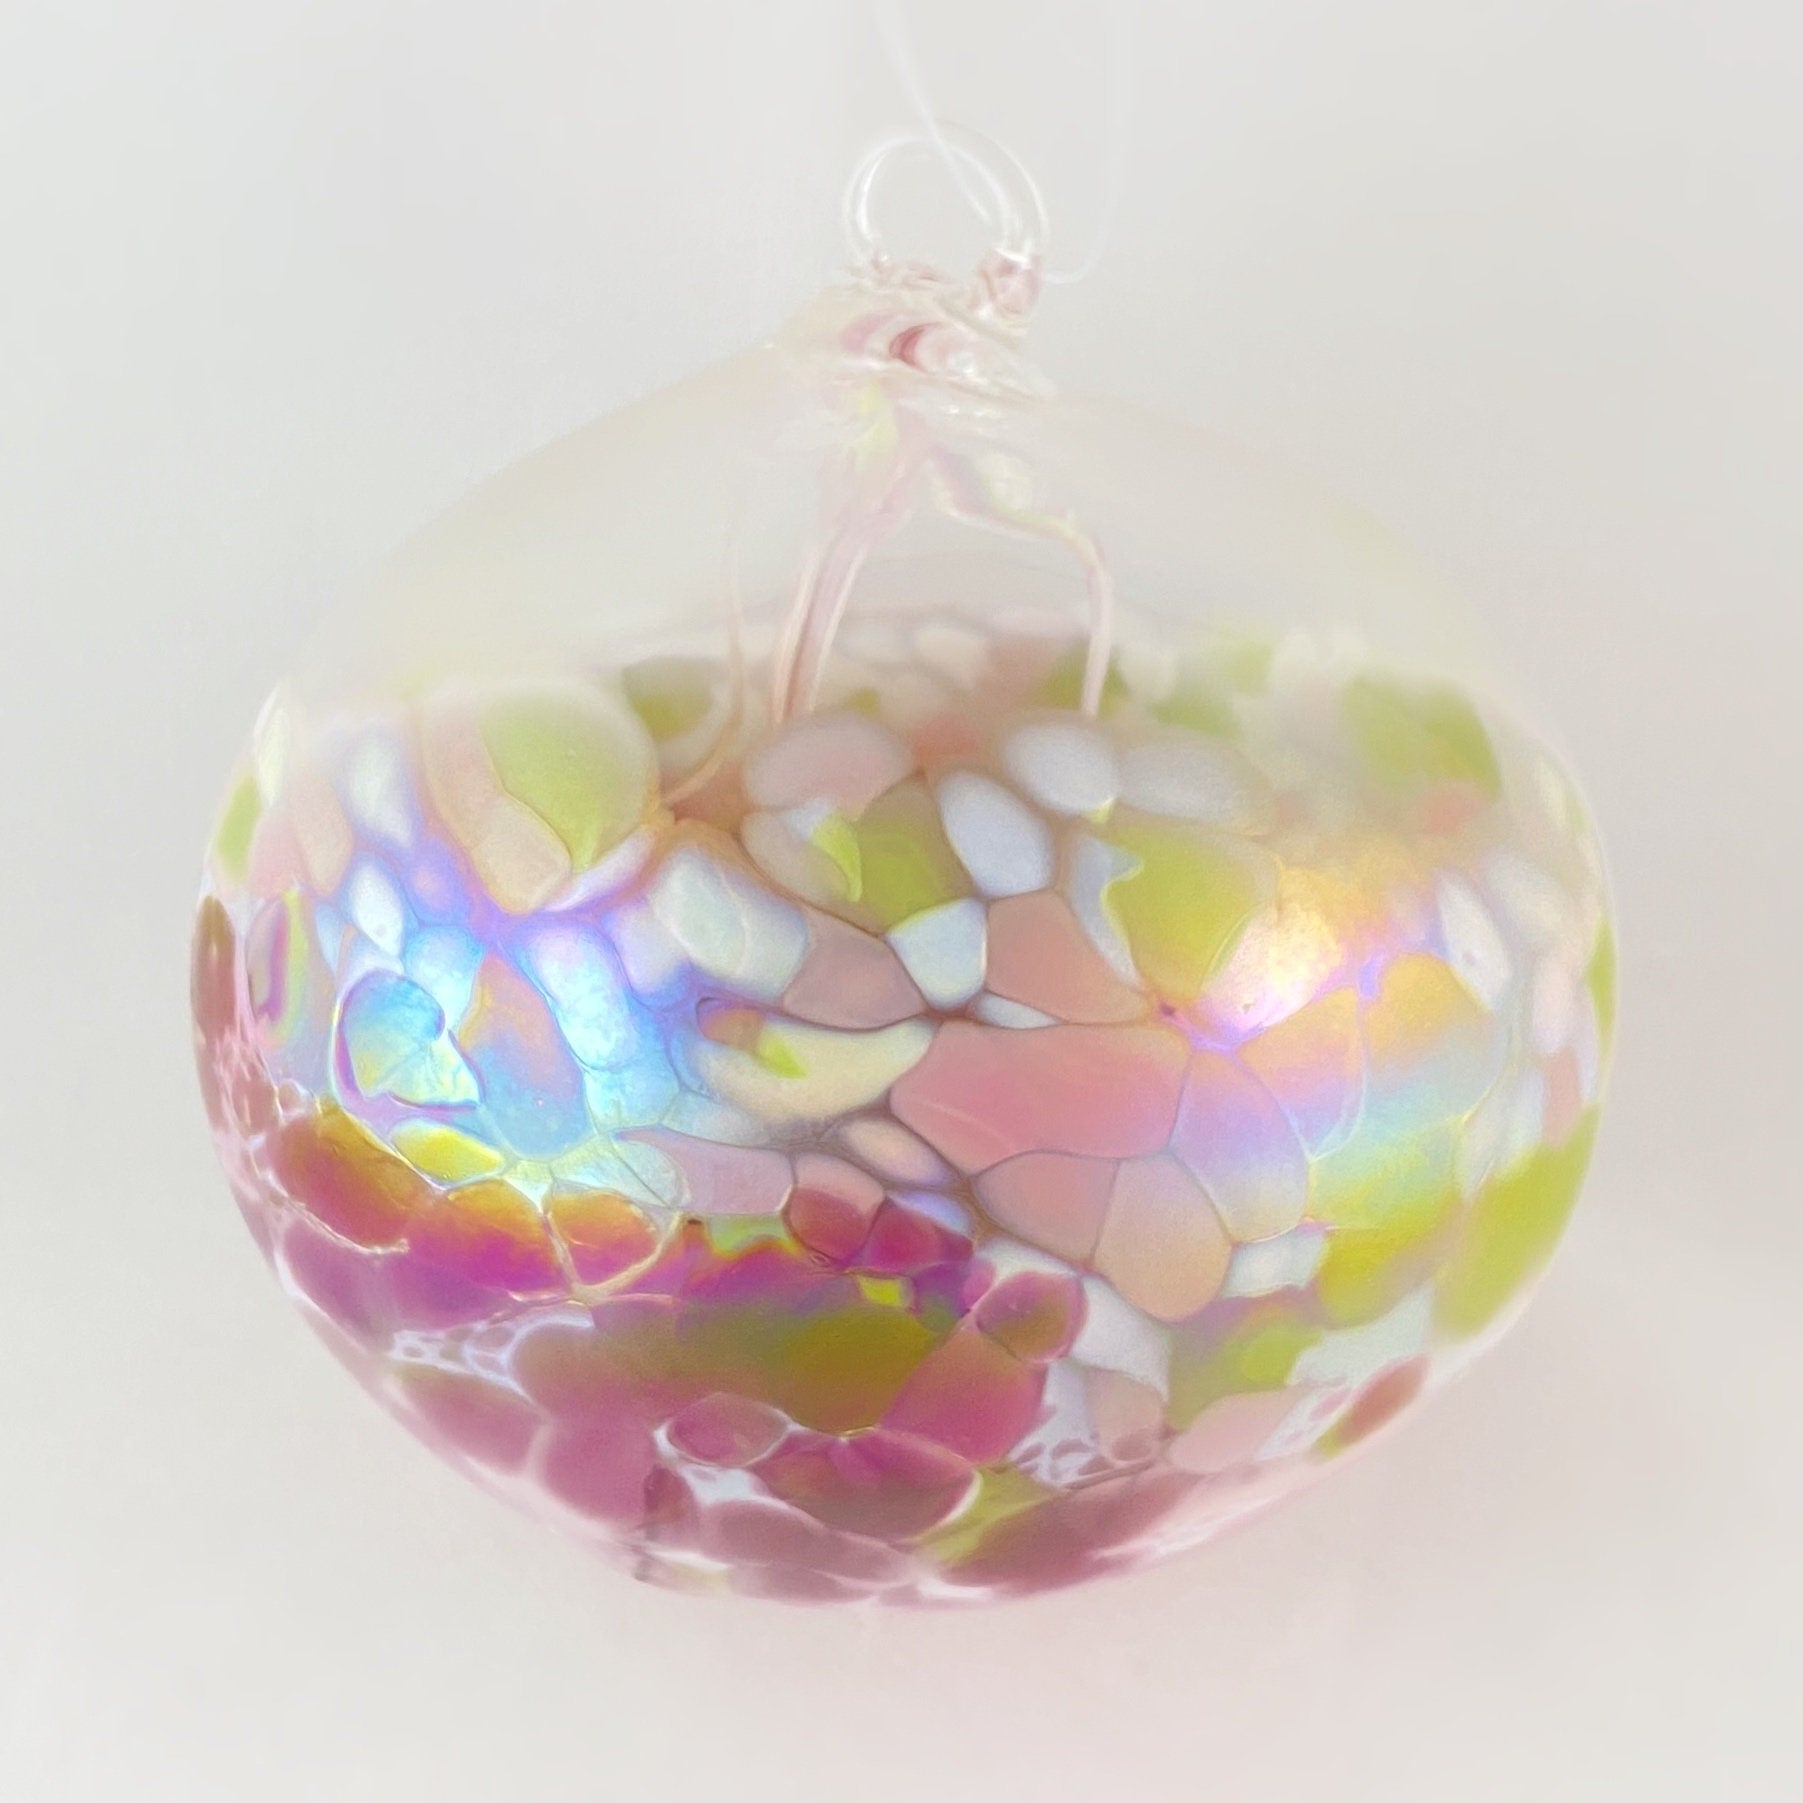 Handmade Glass Witches Ball - Iridescent Pink/Yellow